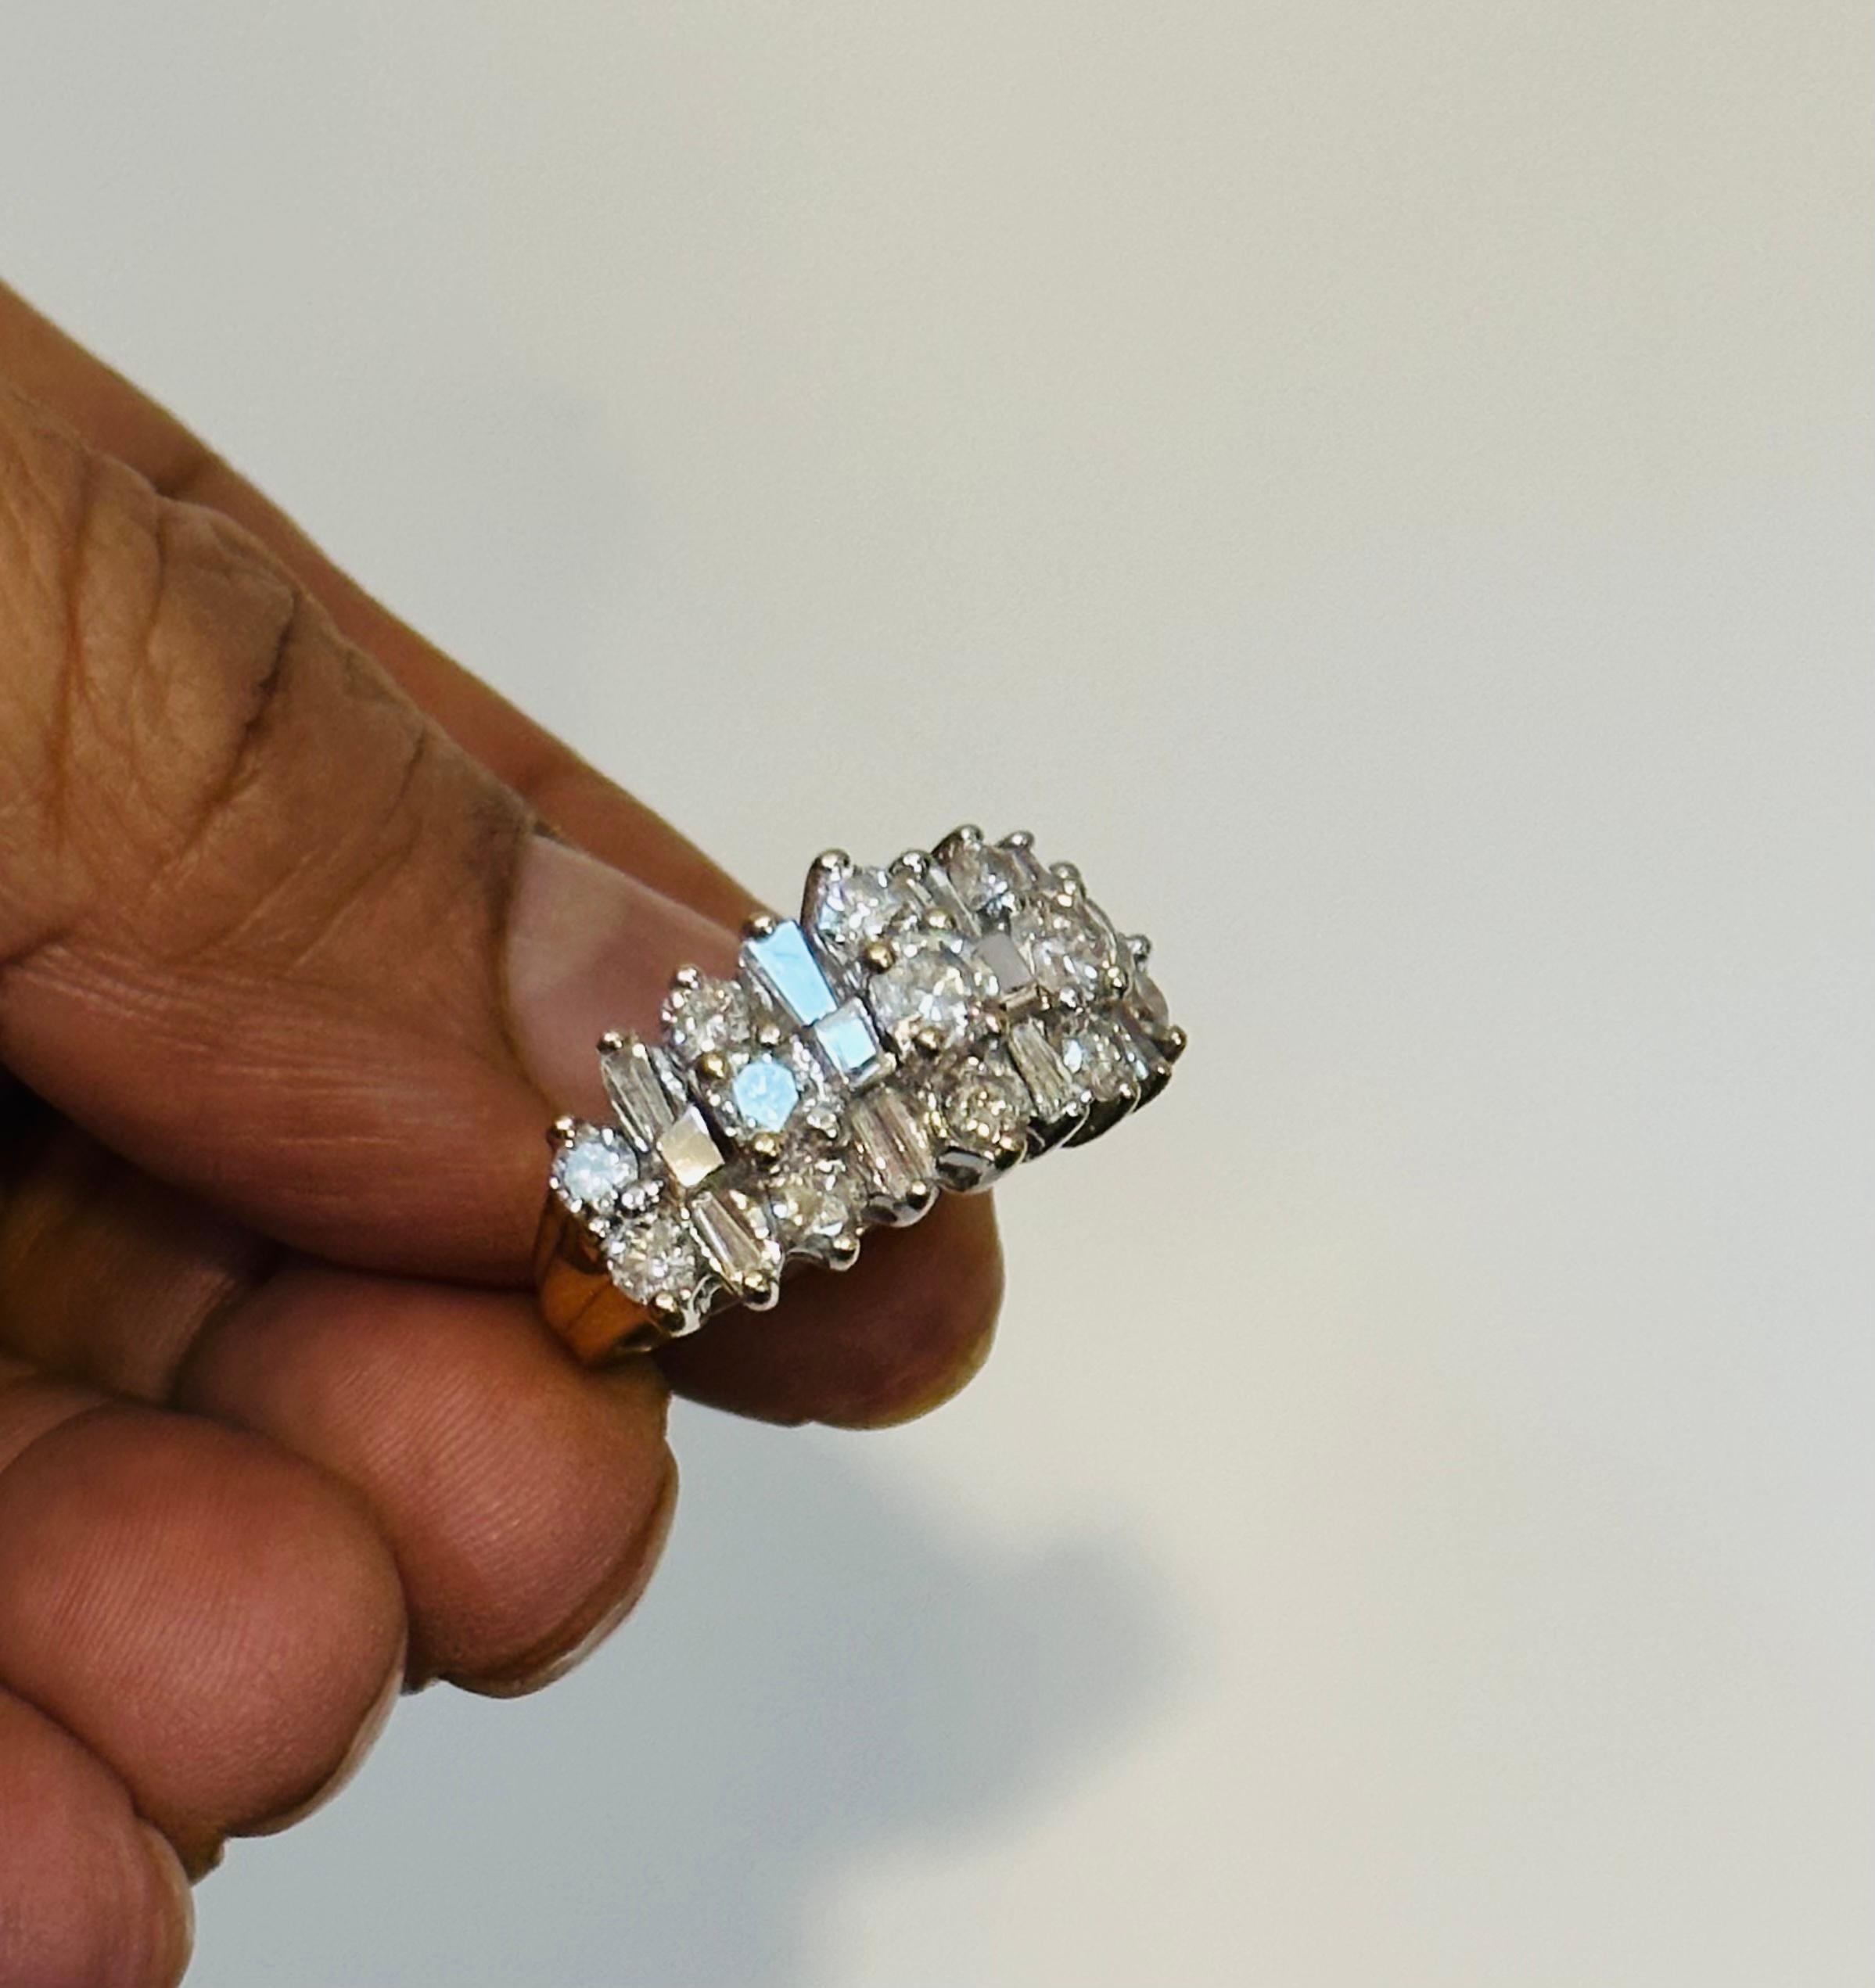 2.8 carat diamond size